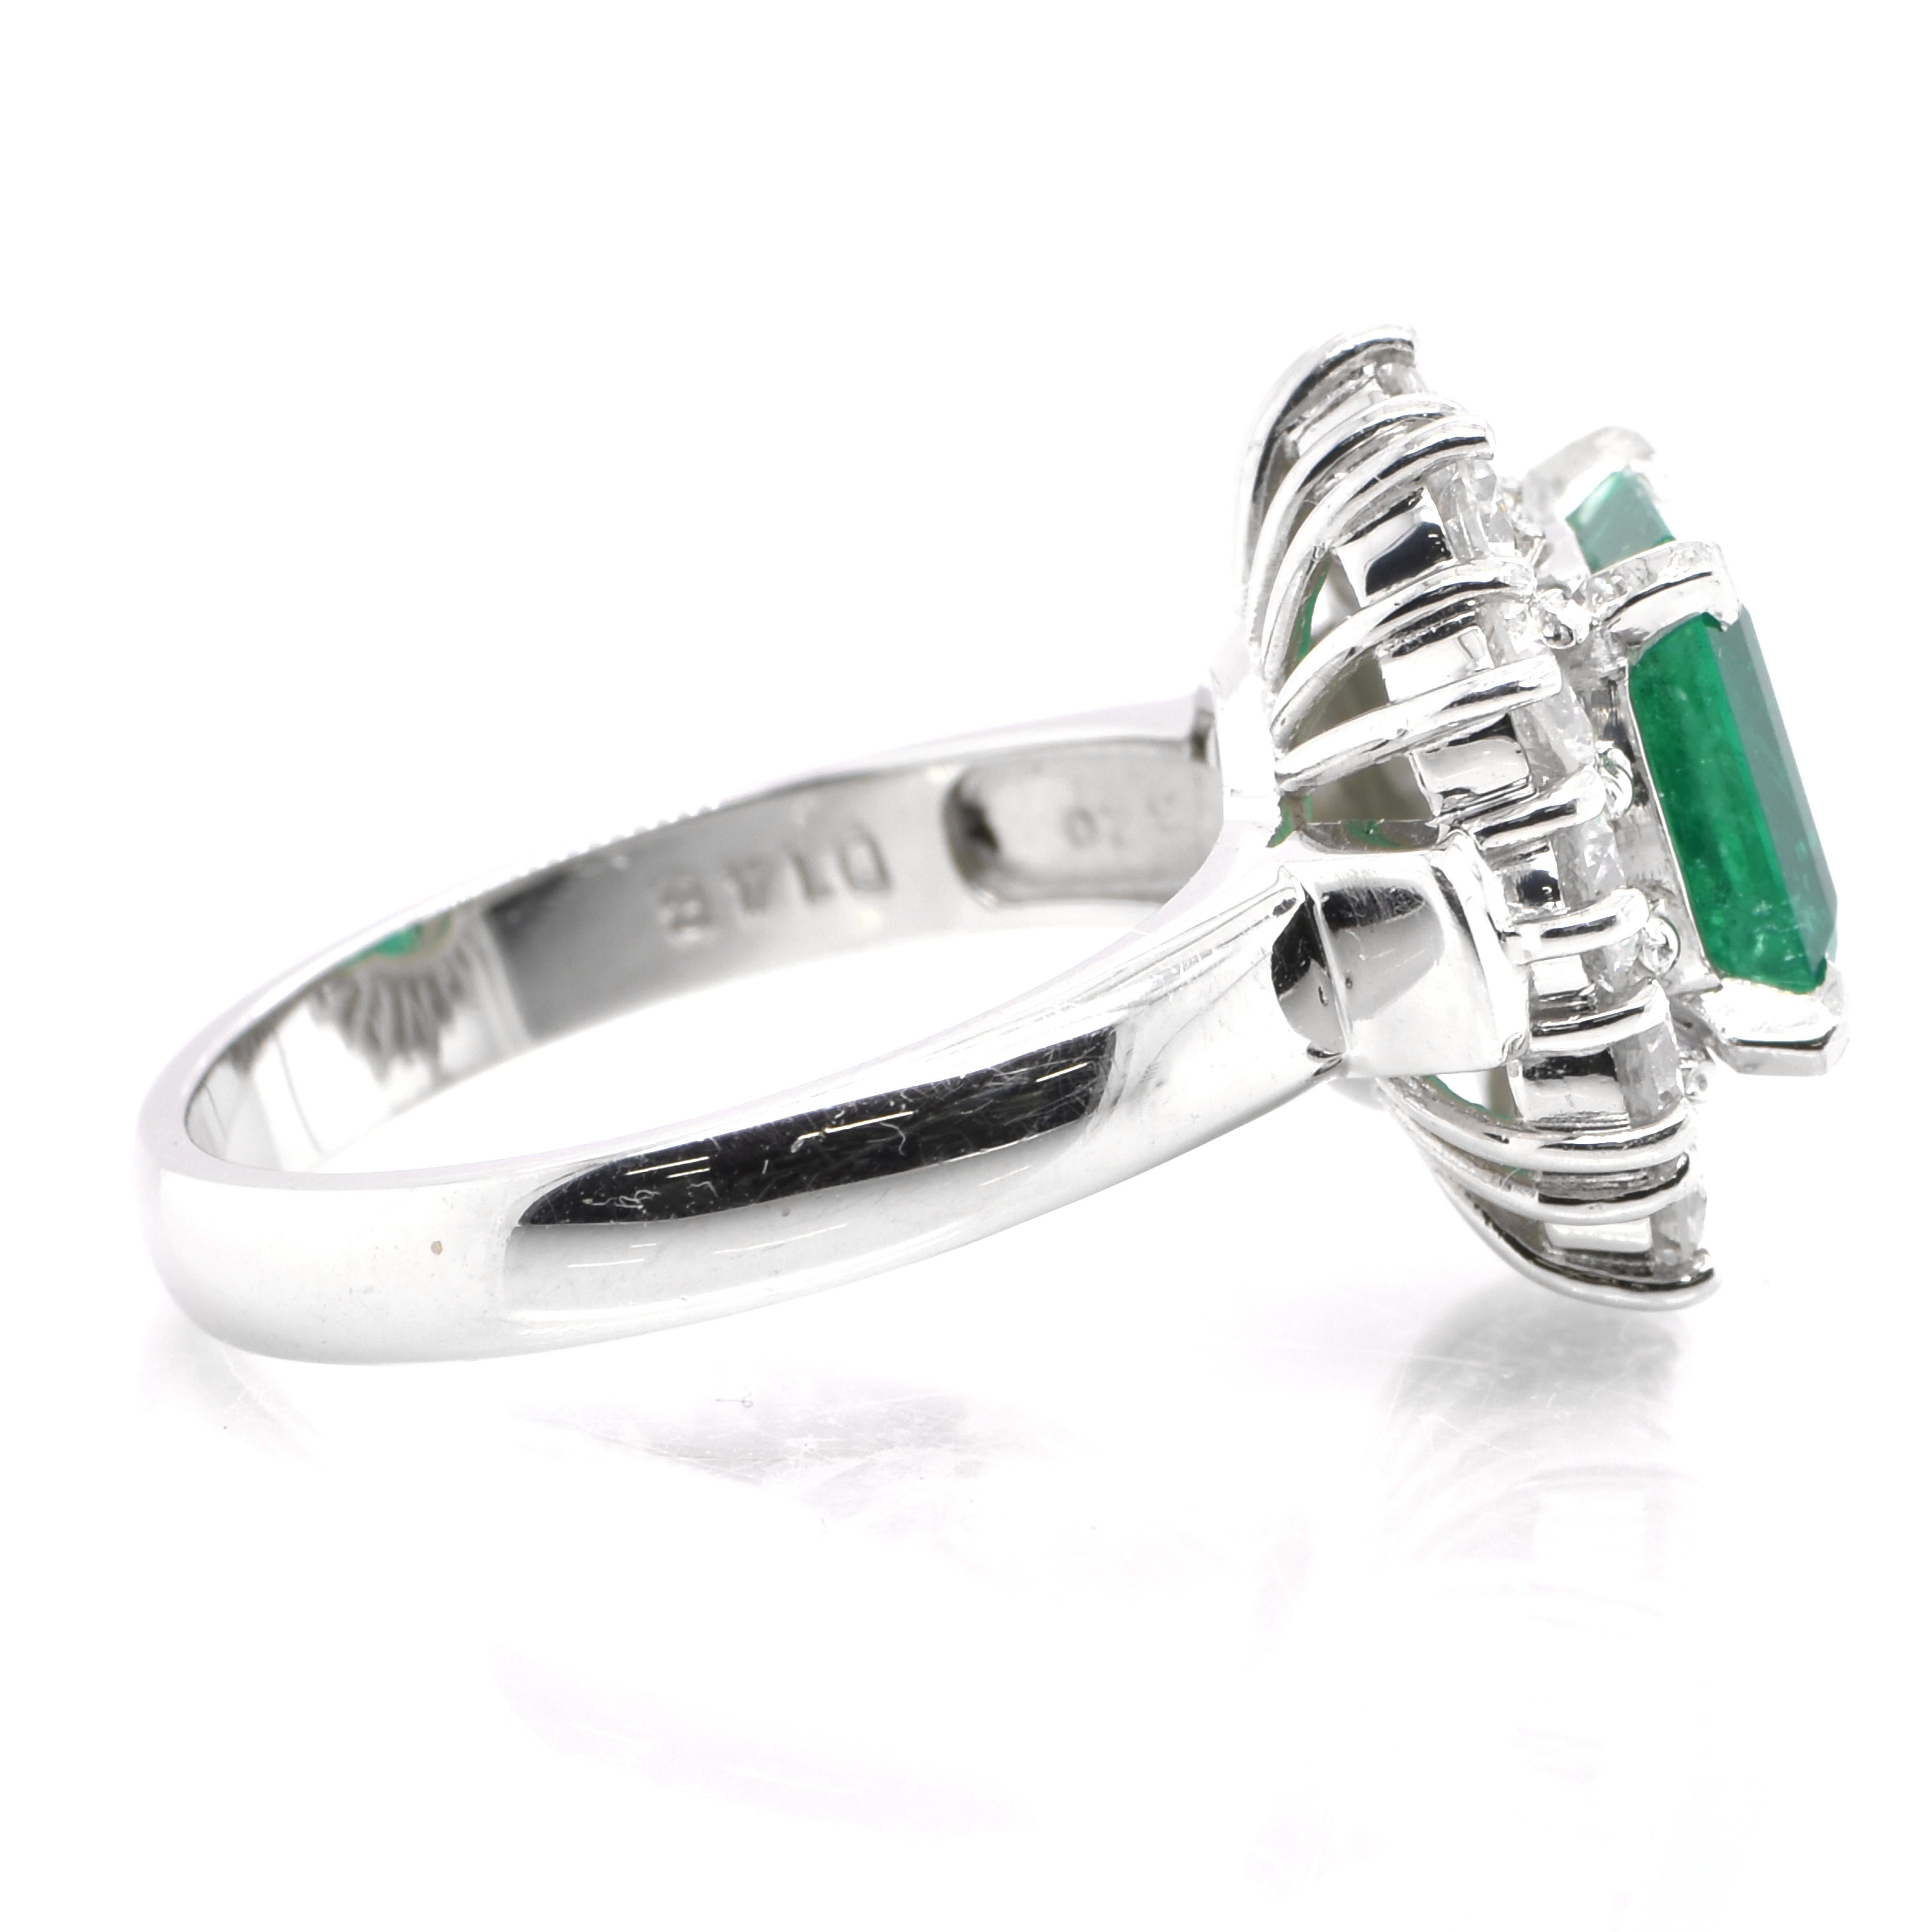 Modern GIA Certified 2.21 Carat Natural Emerald and Diamond Halo Ring Set in Platinum